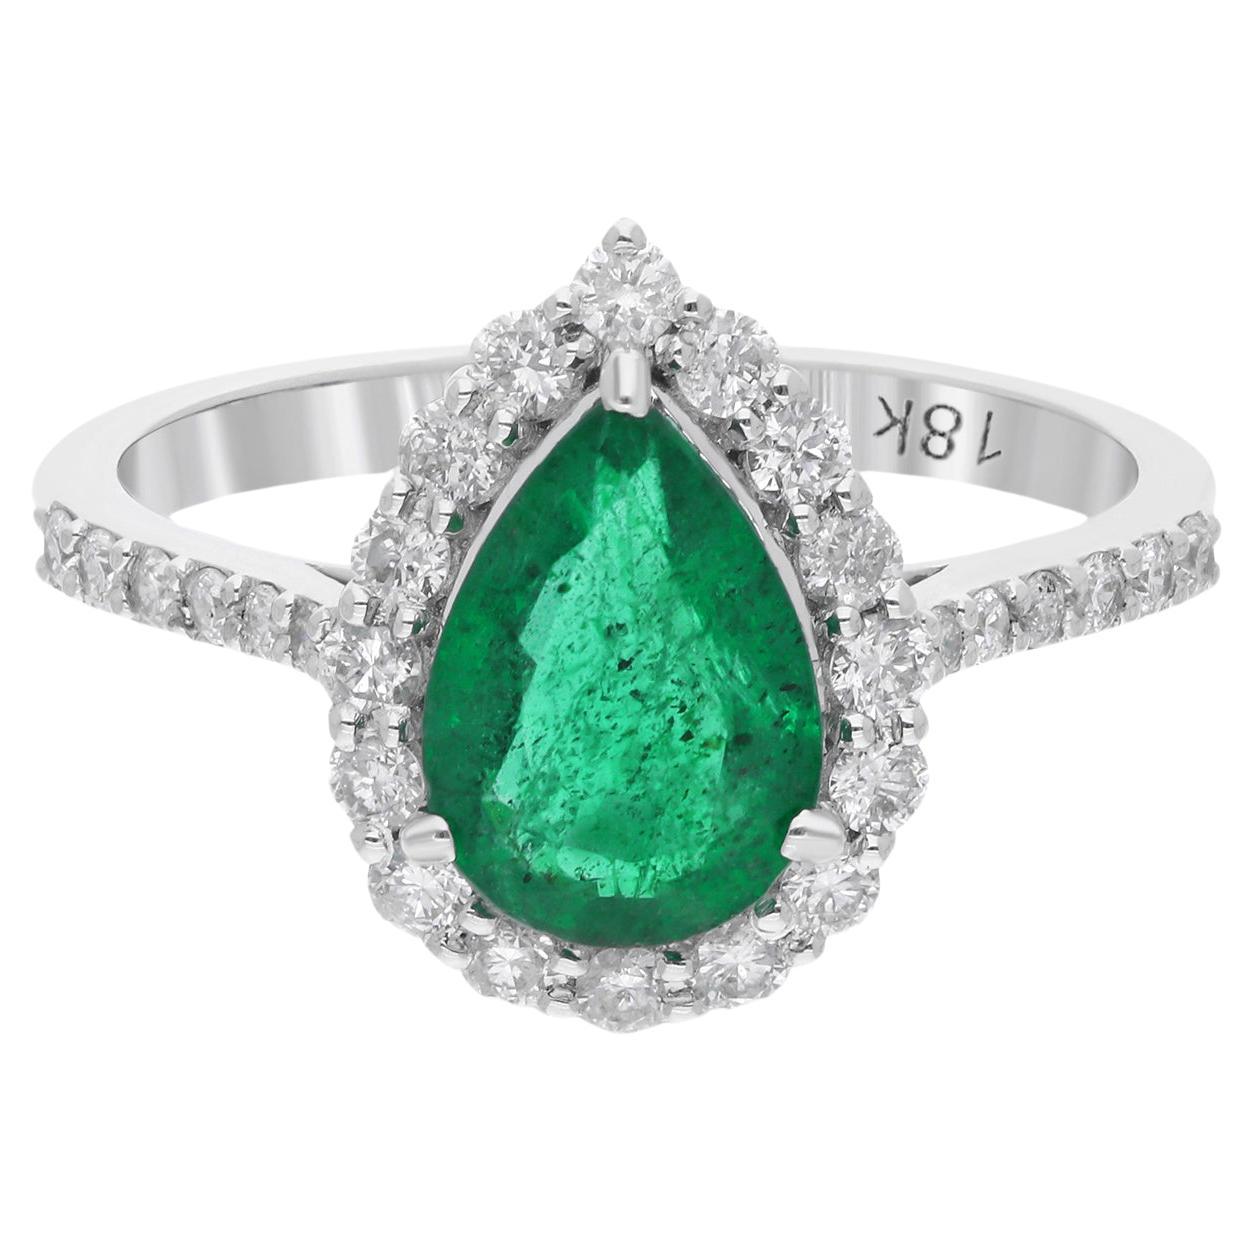 Natural Pear Zambian Emerald Gemstone Ring Diamond 18 Karat White Gold Jewelry